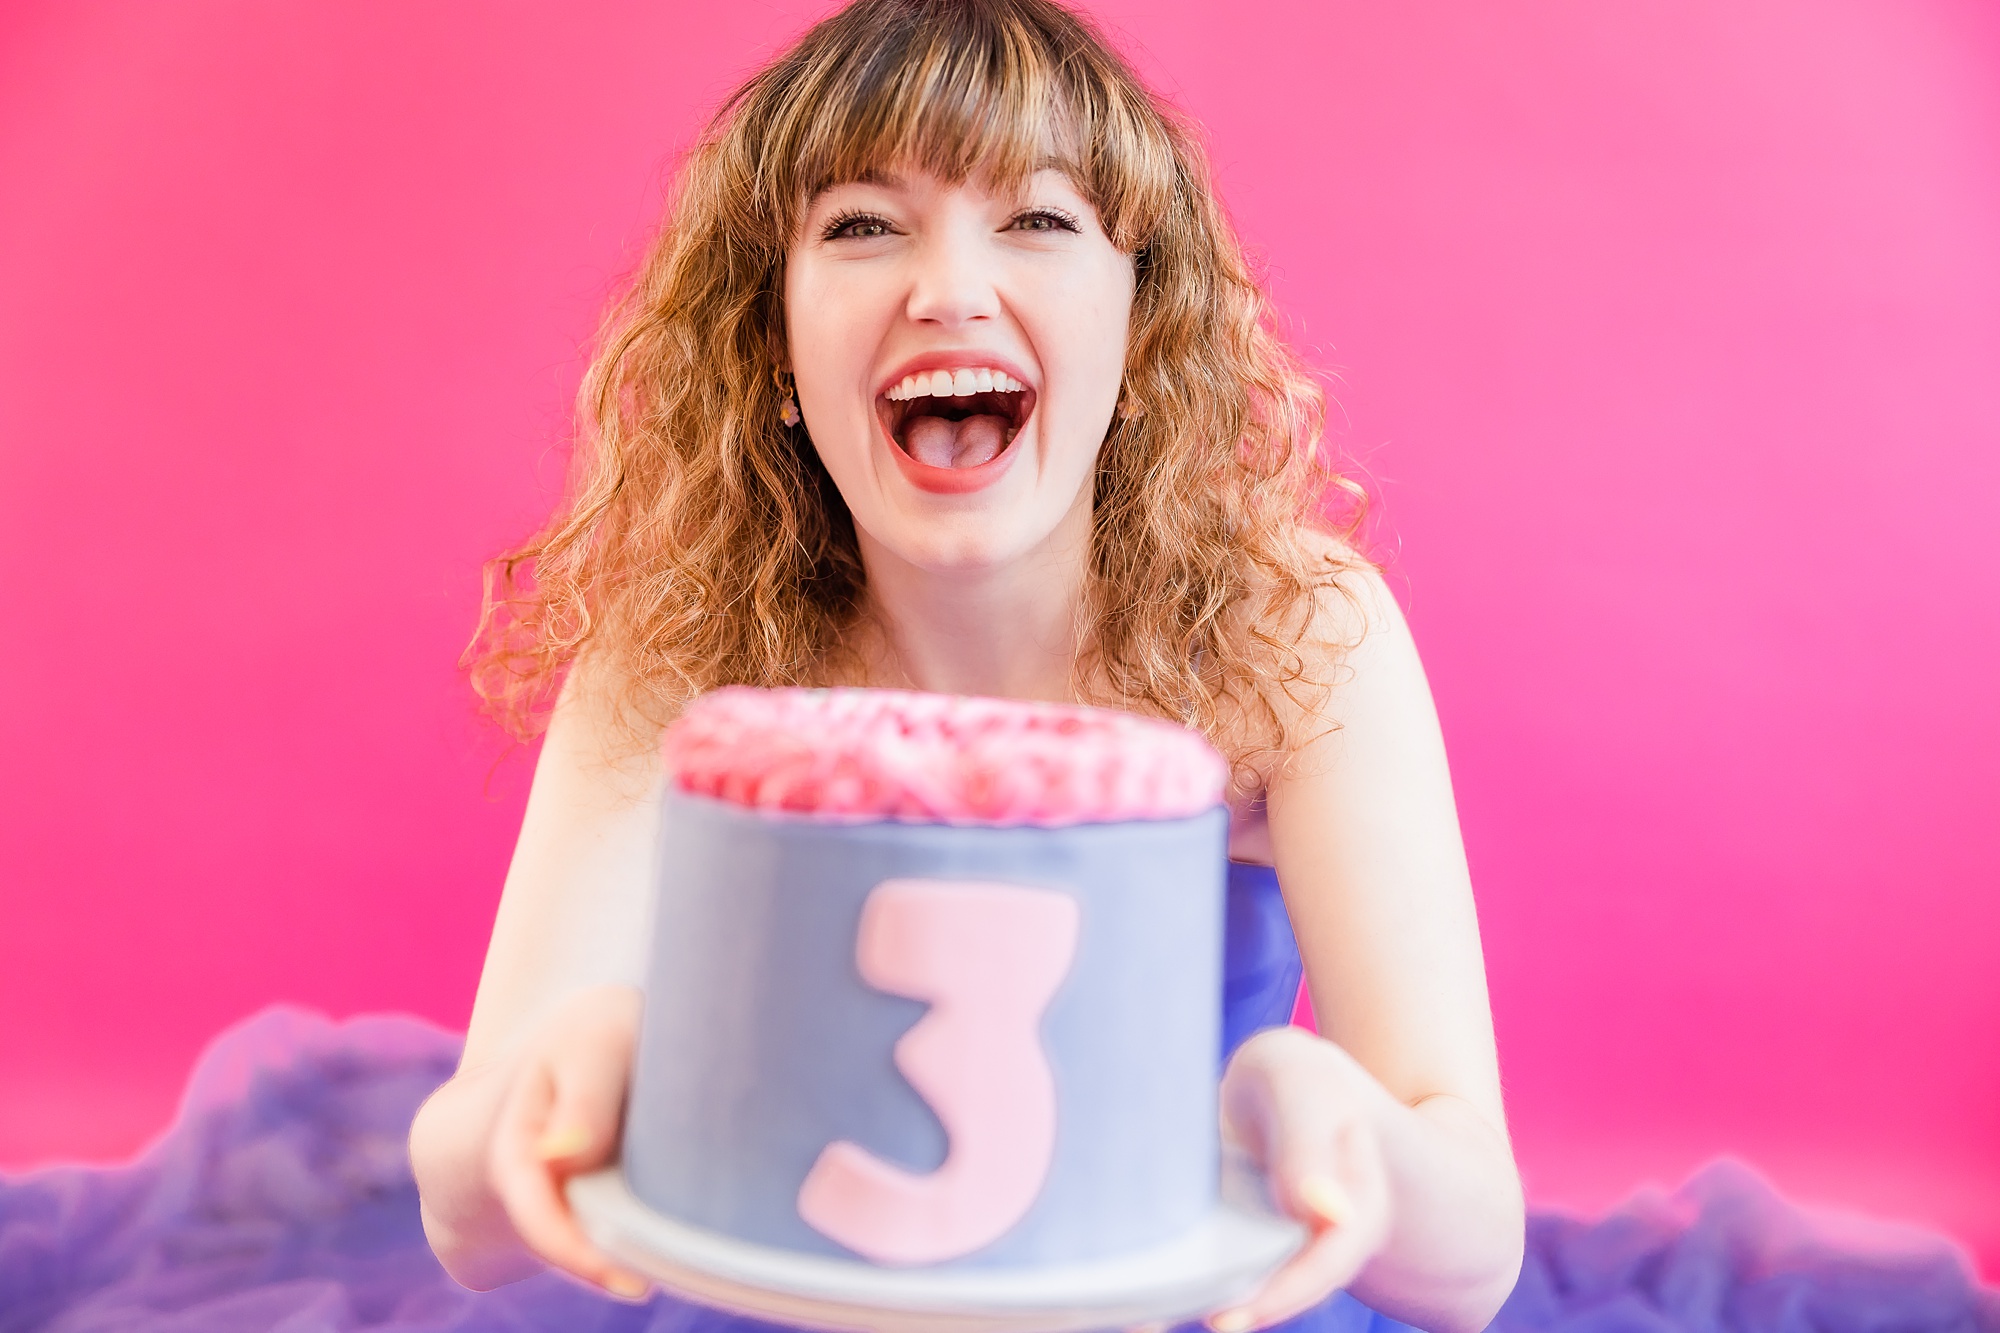 cake smash for business owner's birthday